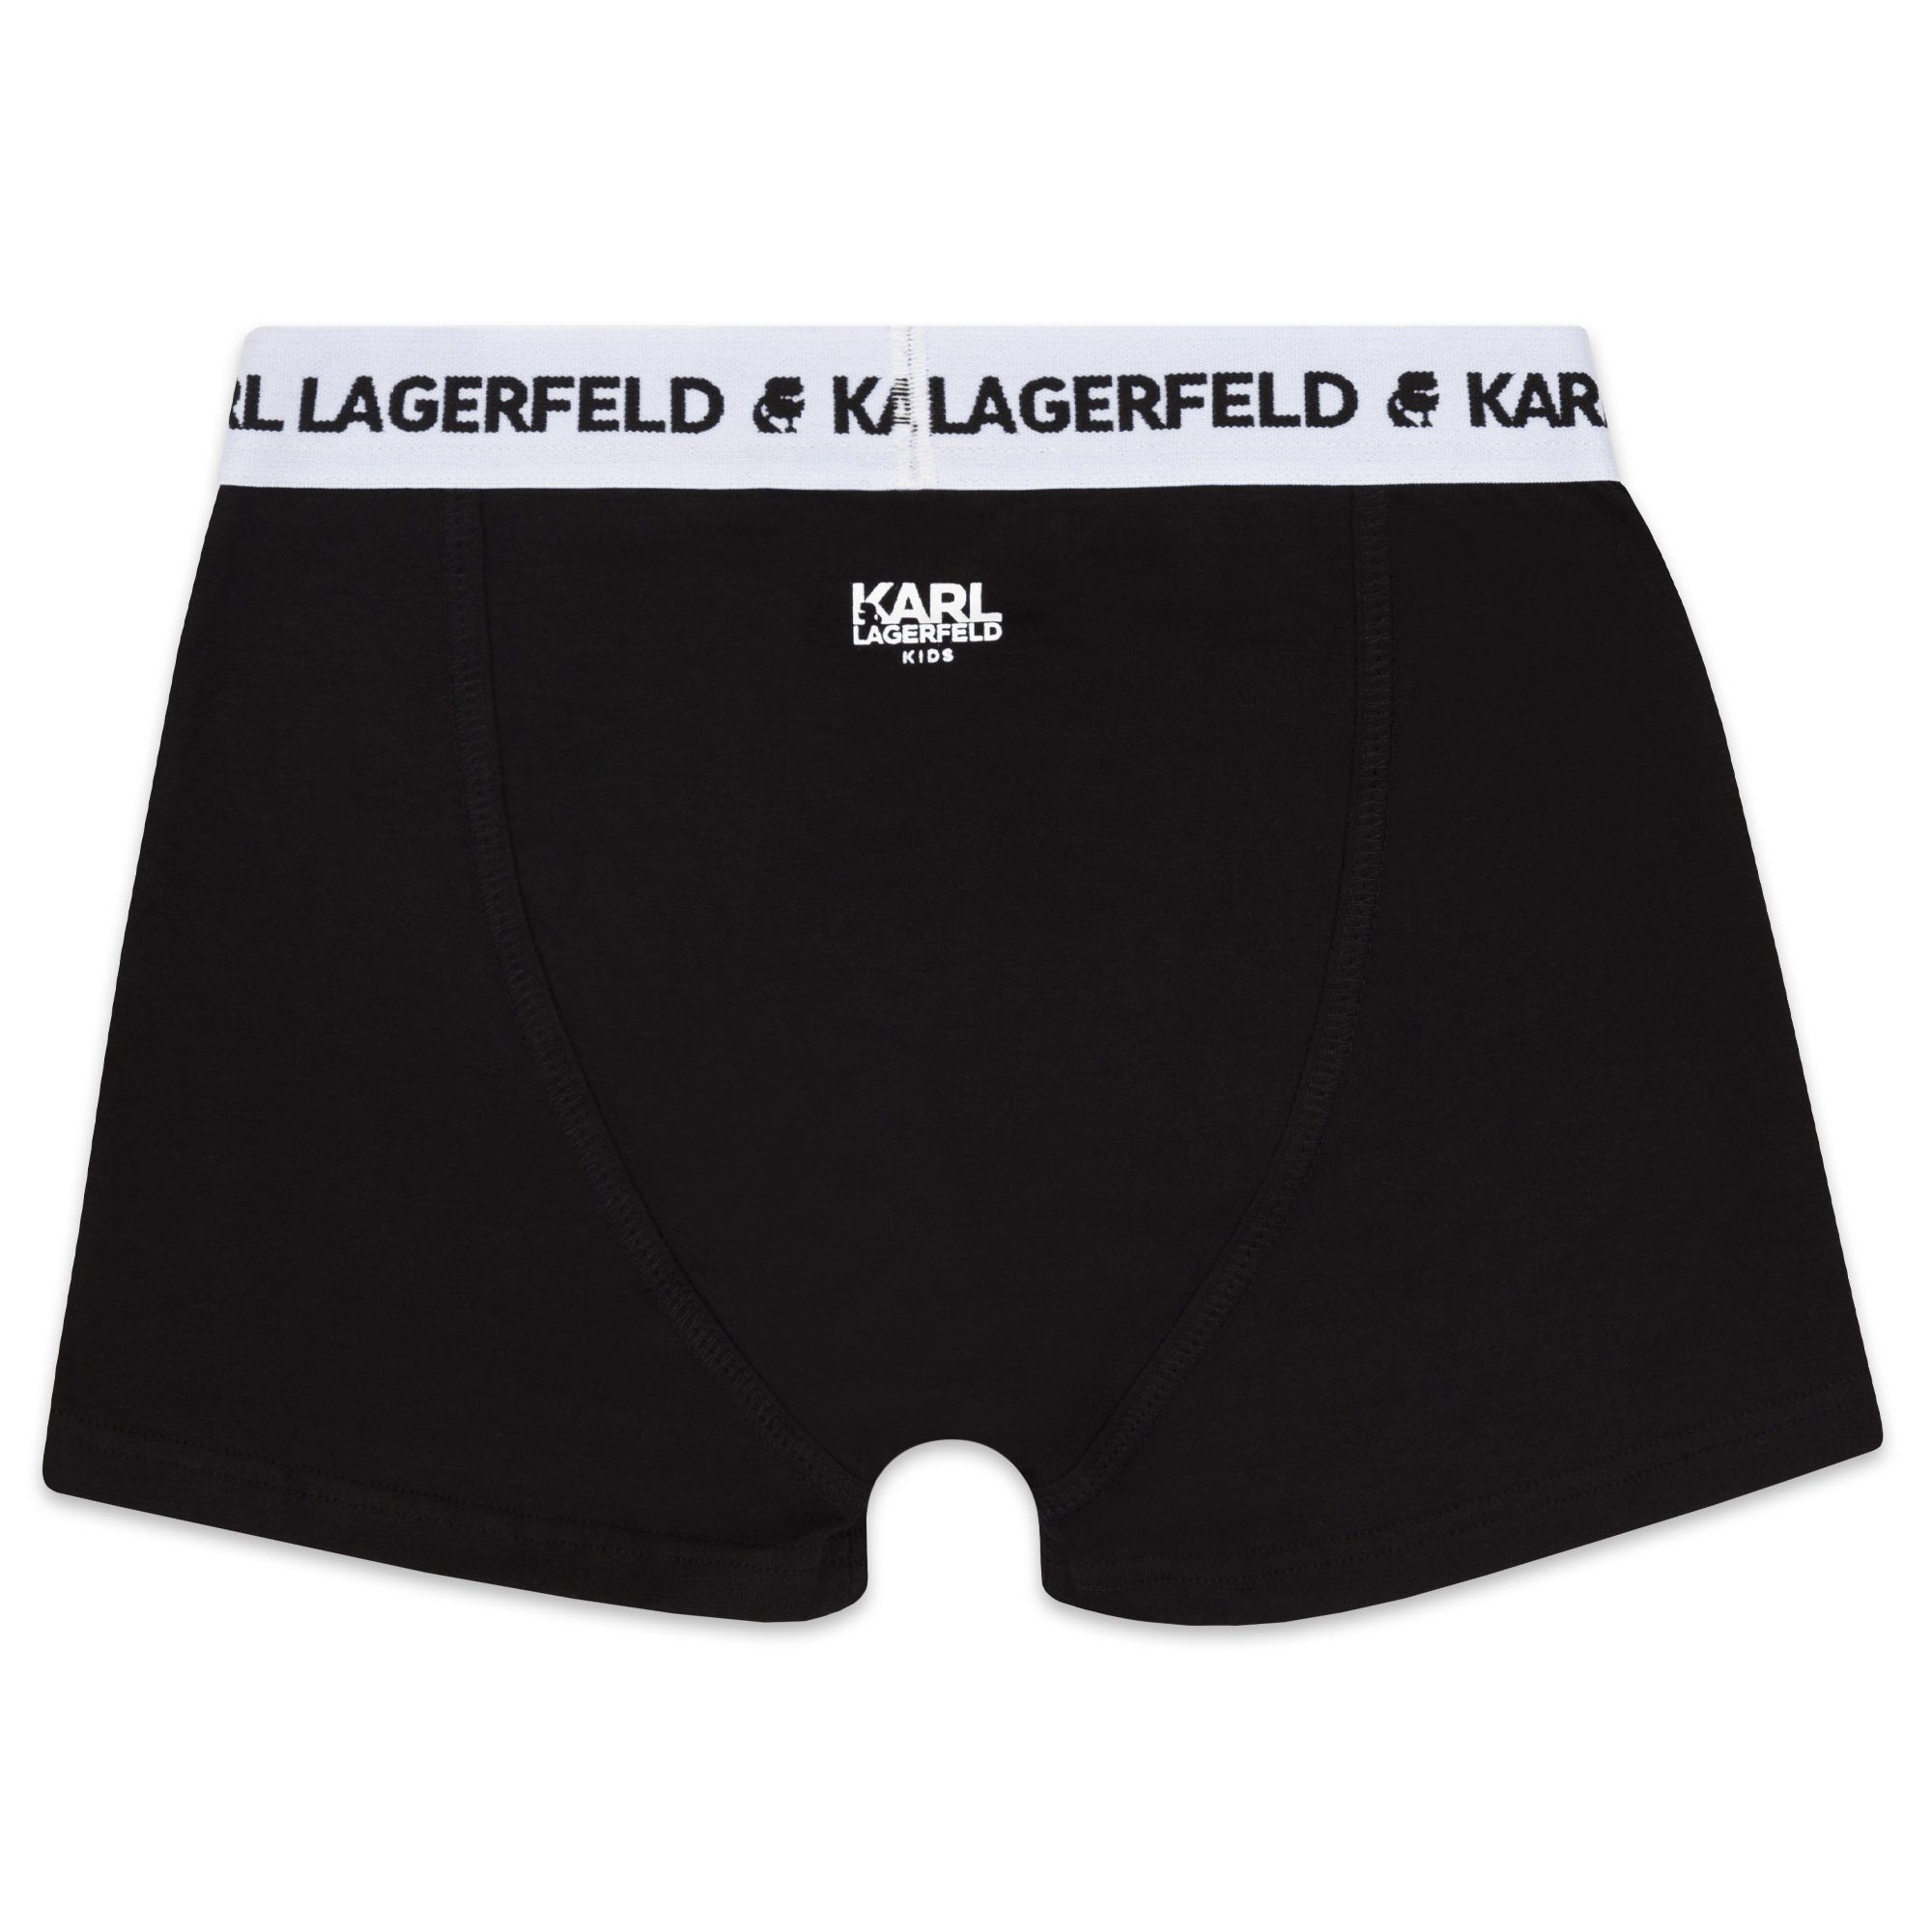 Boxershorts LAGERFELD Trunks Lagerfeld Logo schwarz 2er Set Boxershorts Karl KARL